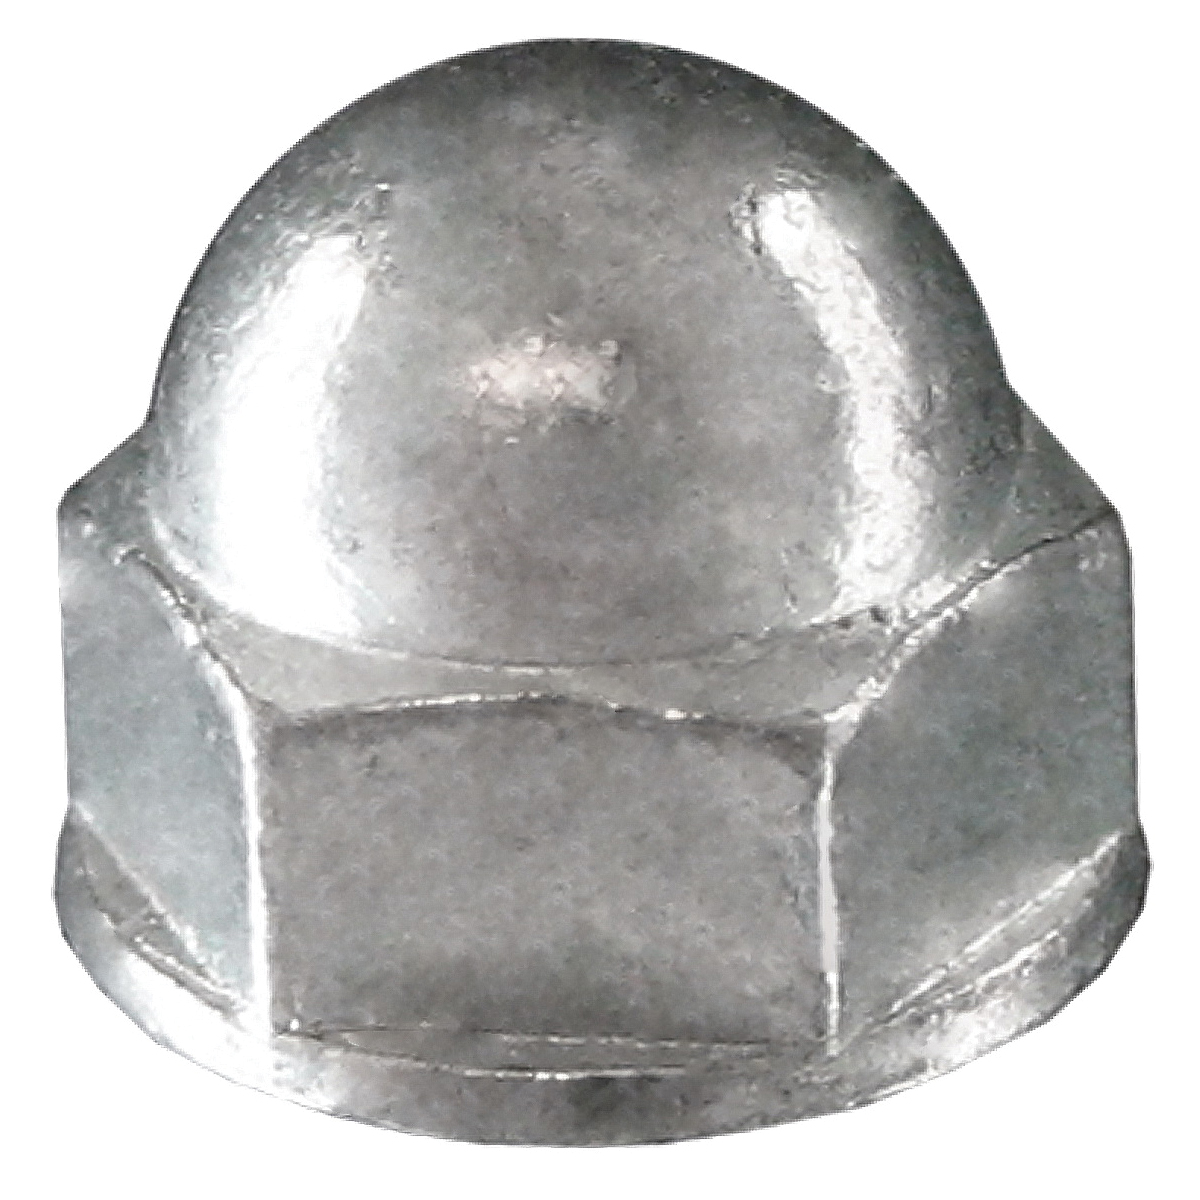 Paulin® 5037-018 Acorn Nut, 3/8-16, Stainless Steel, 18-8 Material Grade